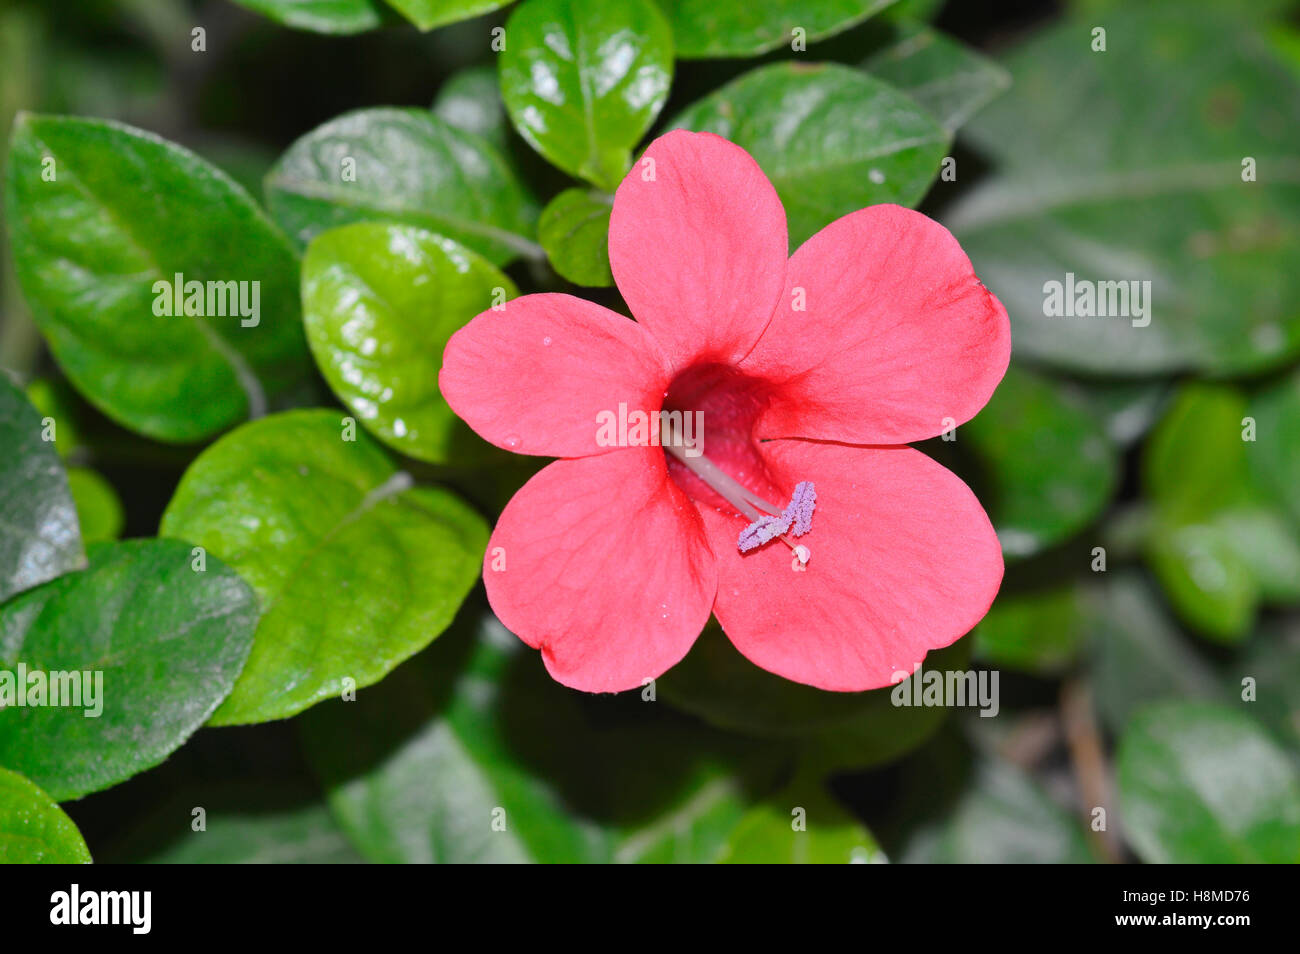 Allamanda flower, Pune Stock Photo